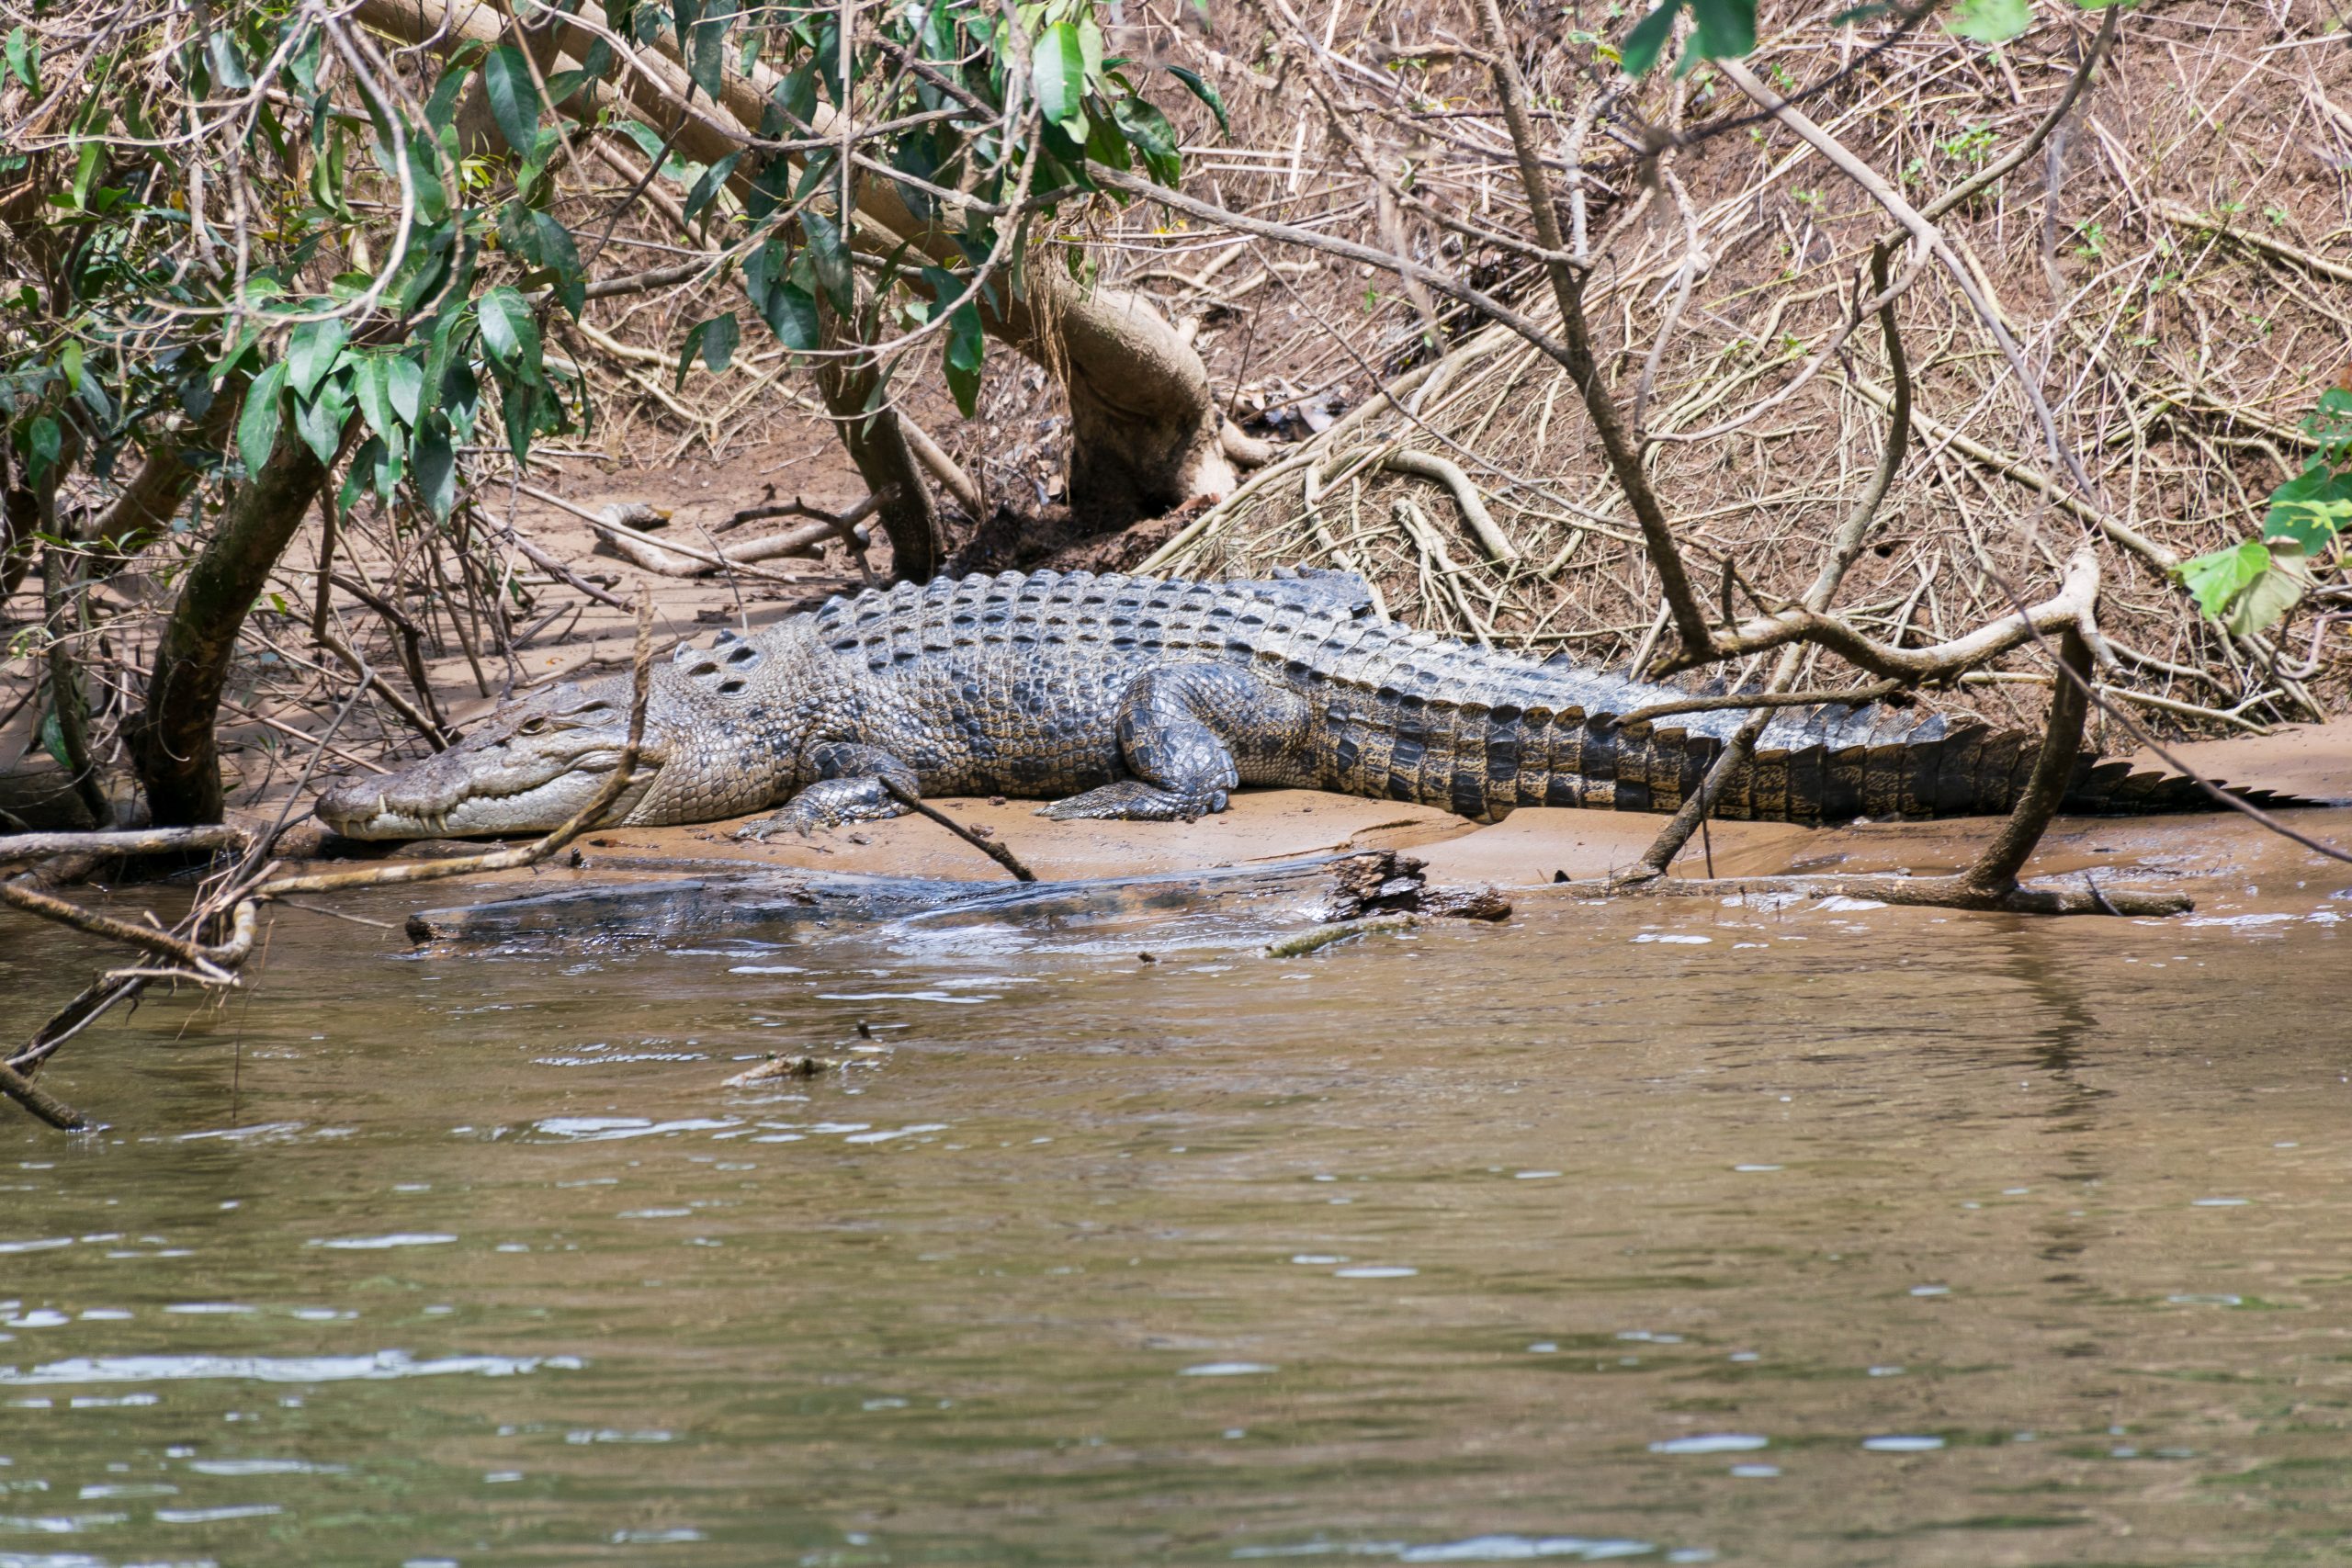 Doen in Port Douglas en omgeving: krokodillen spotten 